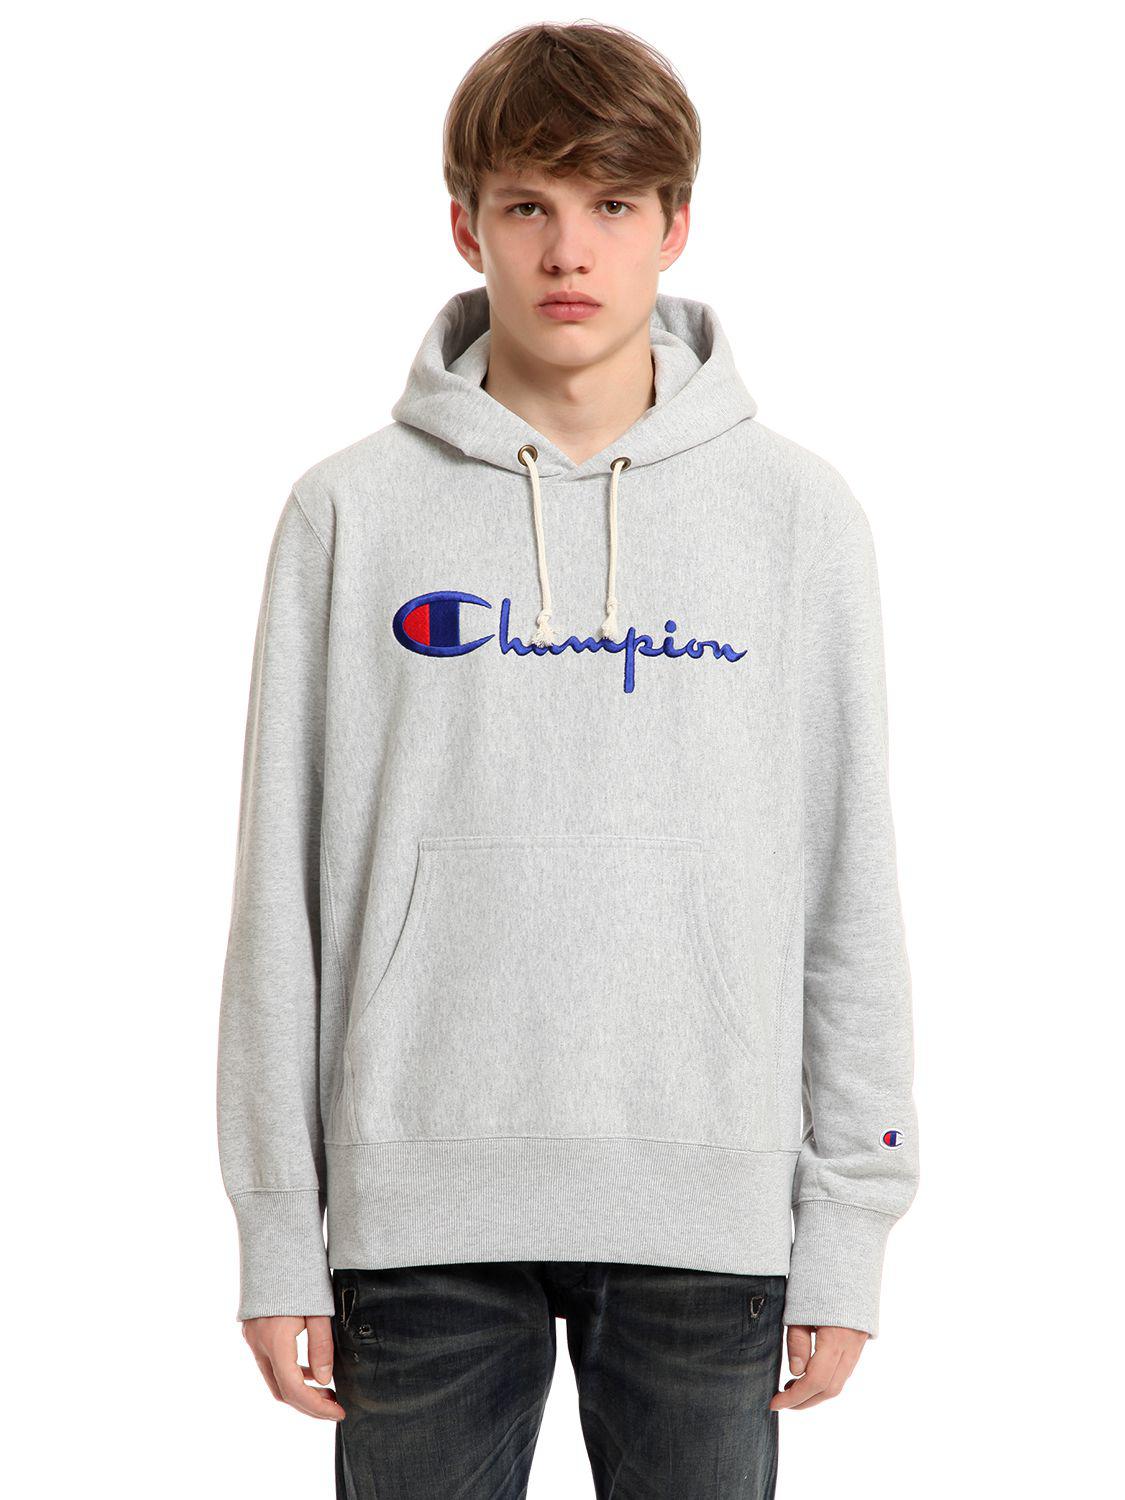 Champion Hooded Logo Cotton Sweatshirt in Gray for Men - Lyst